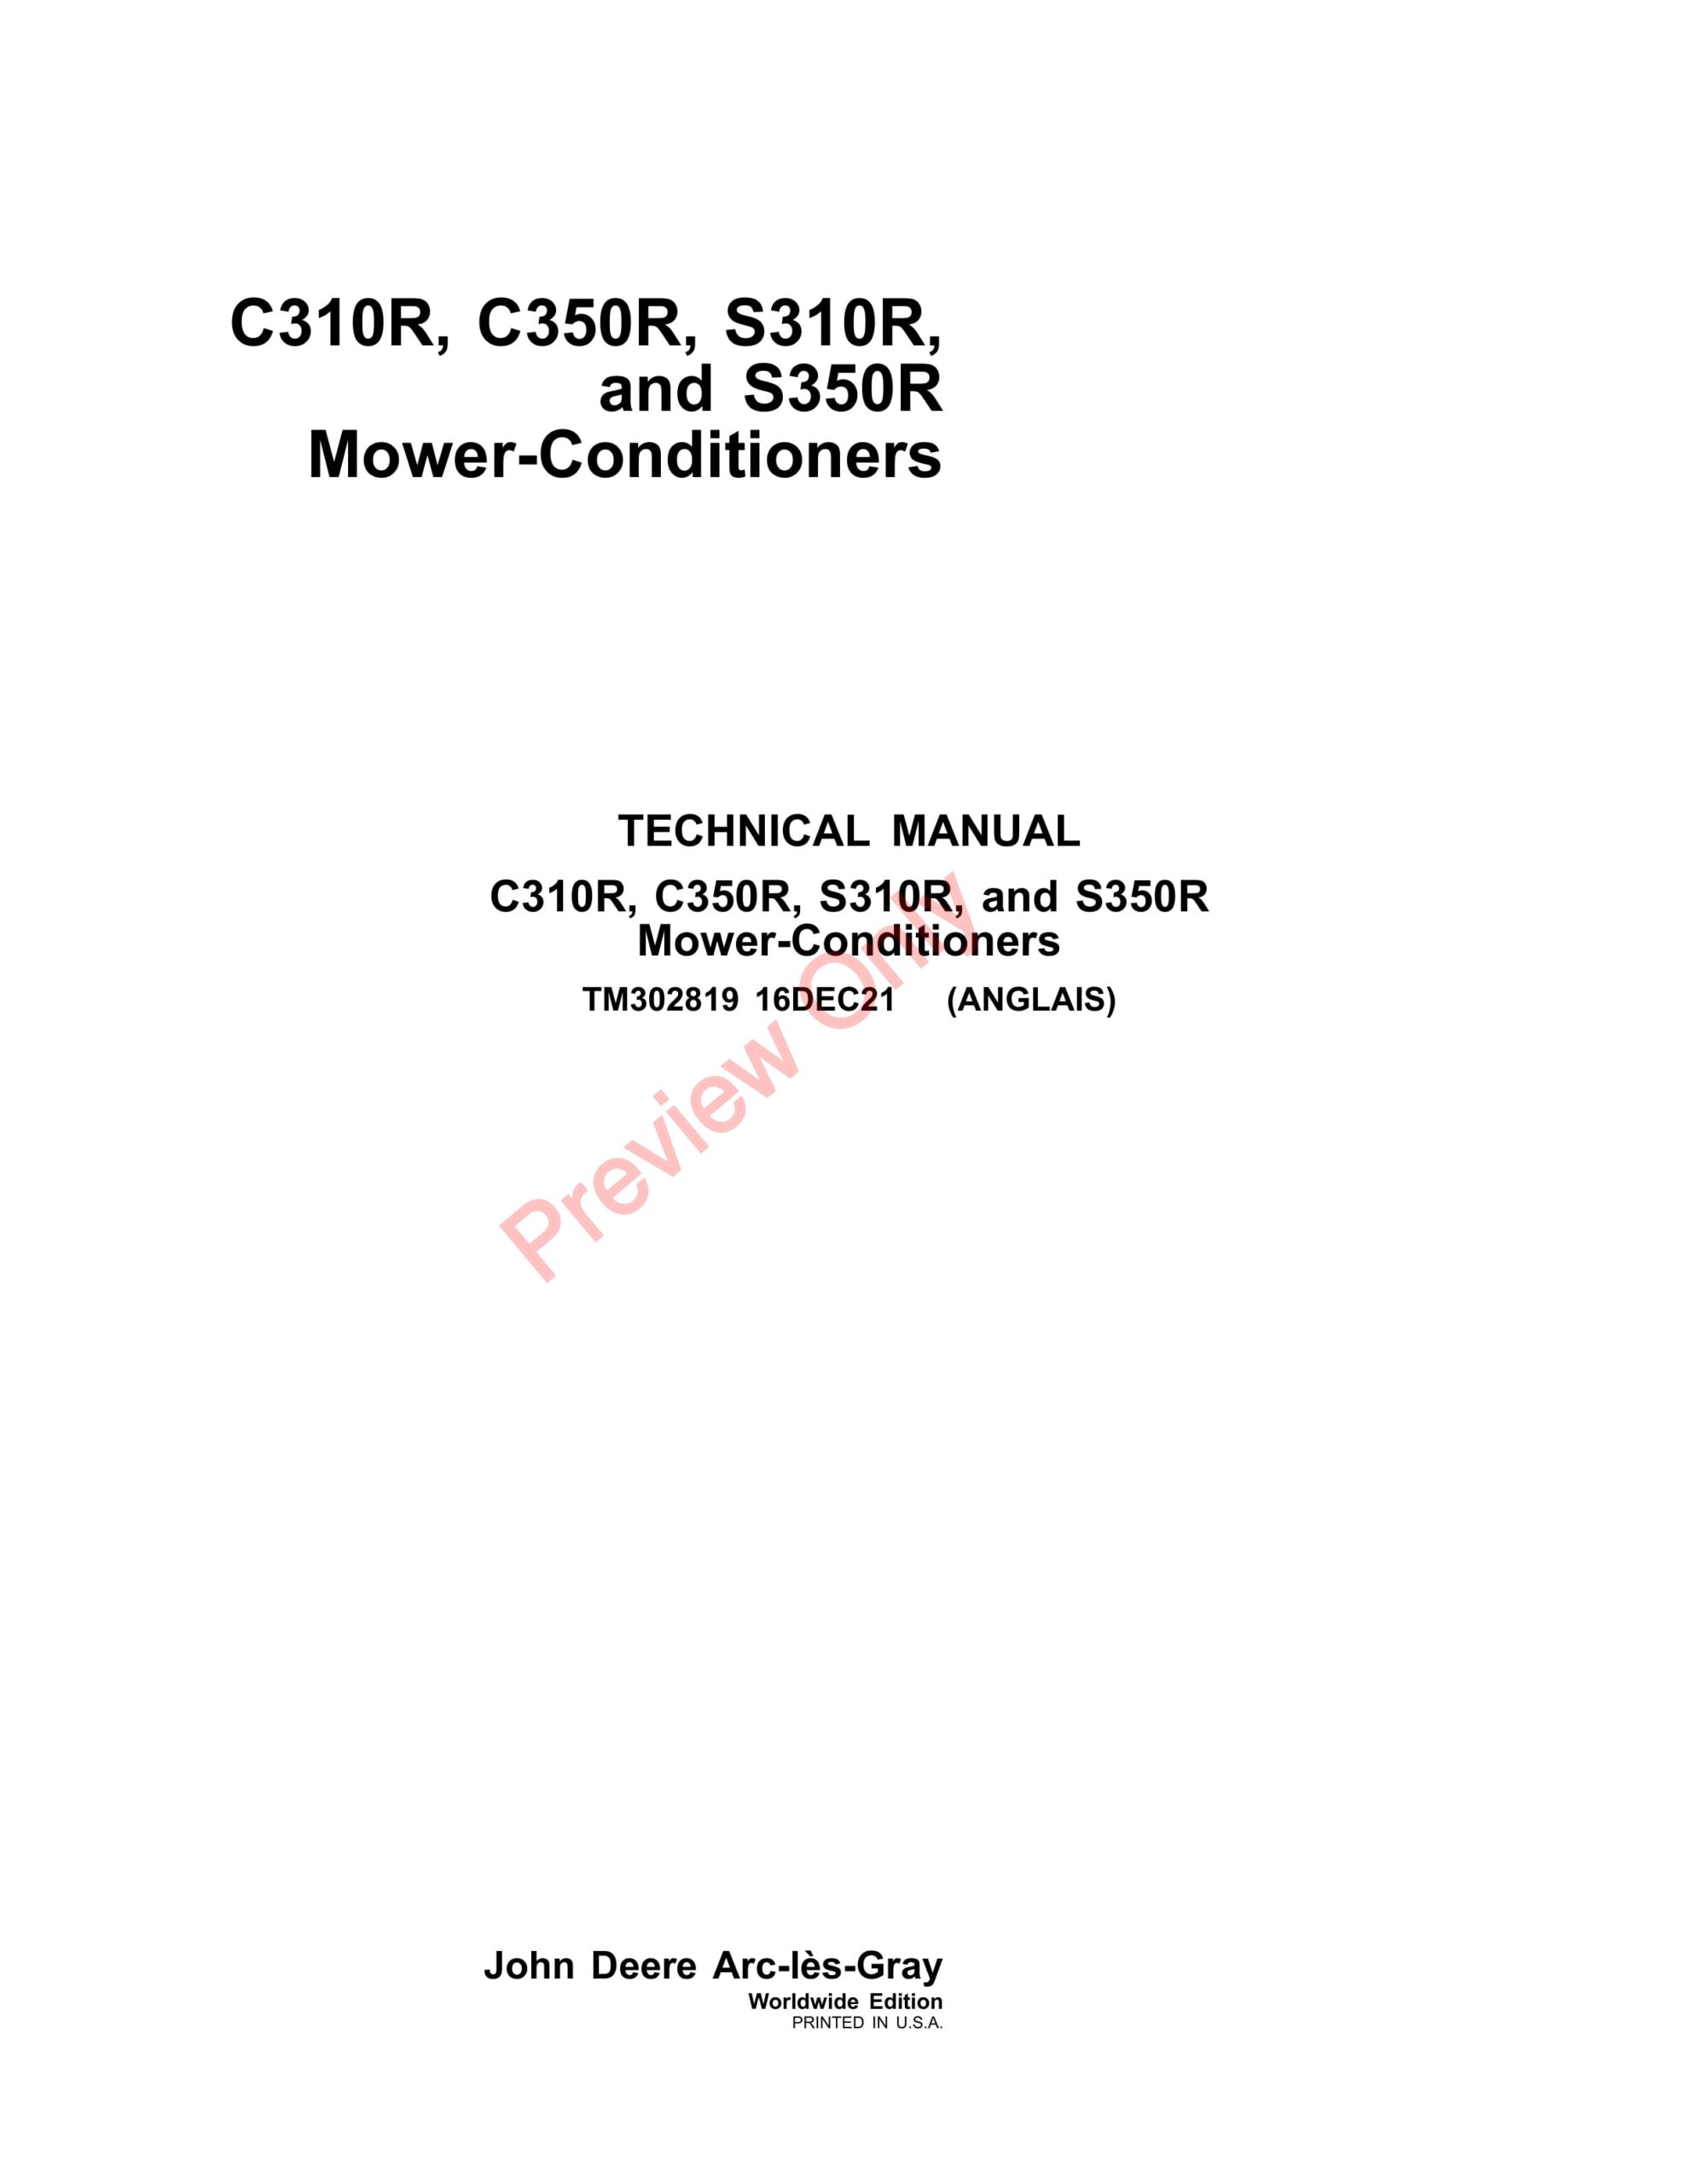 John Deere C310R, C350R, S310R, and S350R Mower-Conditioners Technical Manual TM302819 16DEC21-1